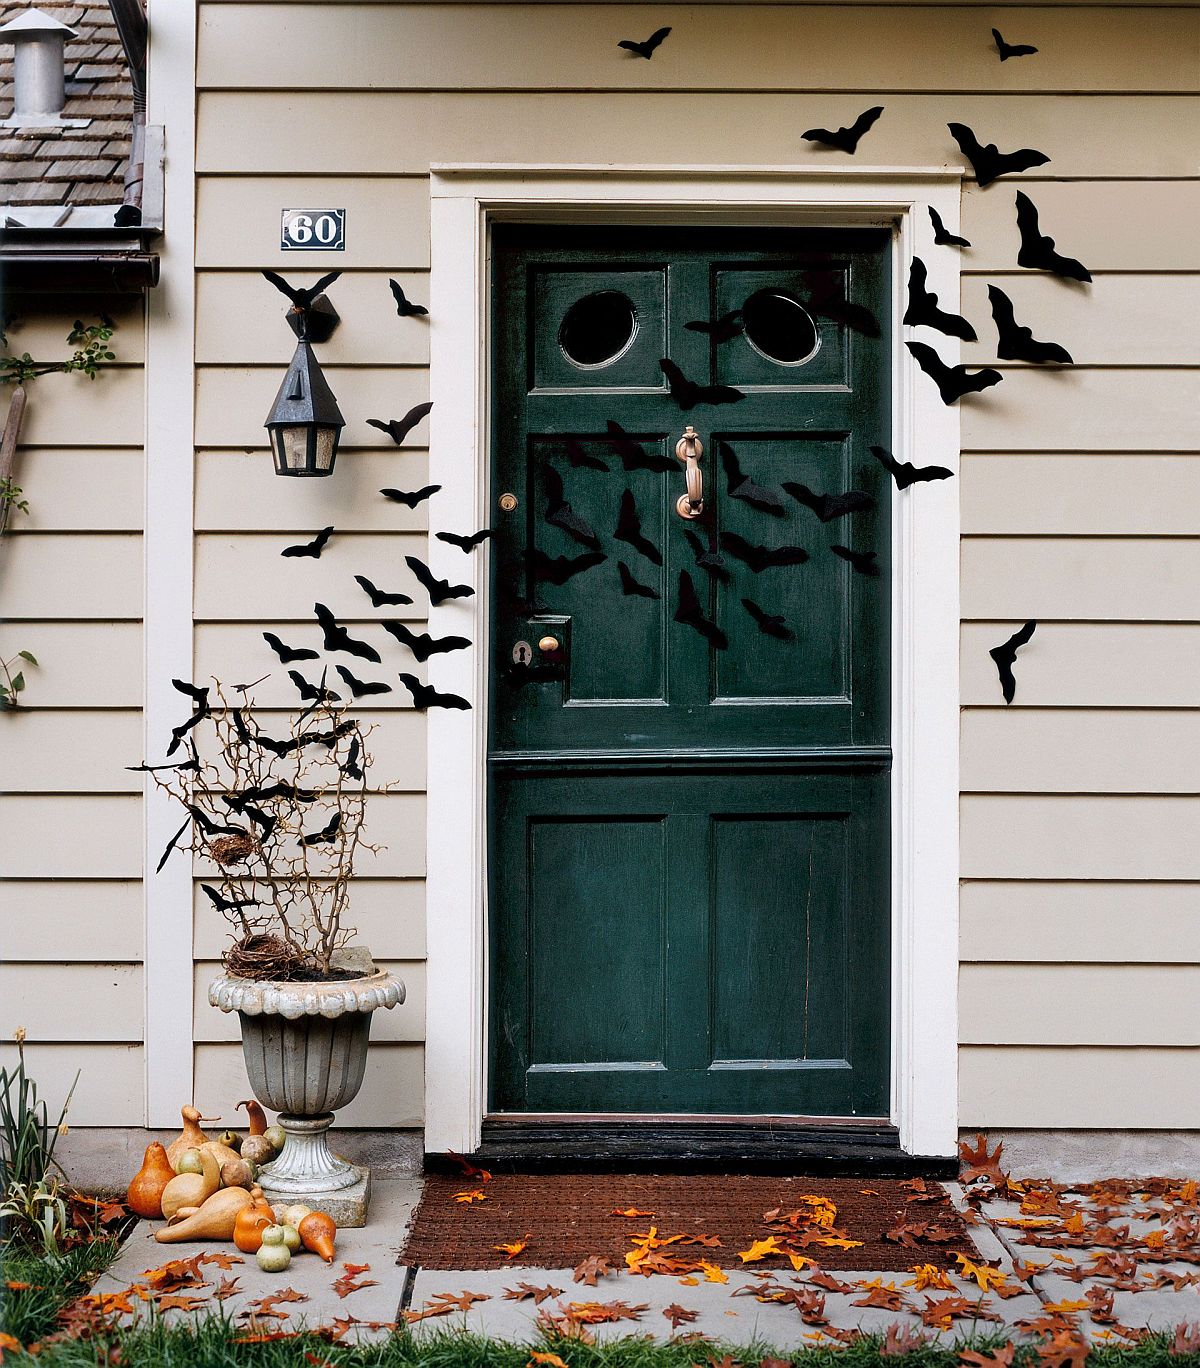 DIY-front-door-Halloween-decorating-idea-with-bats-and-more-81527